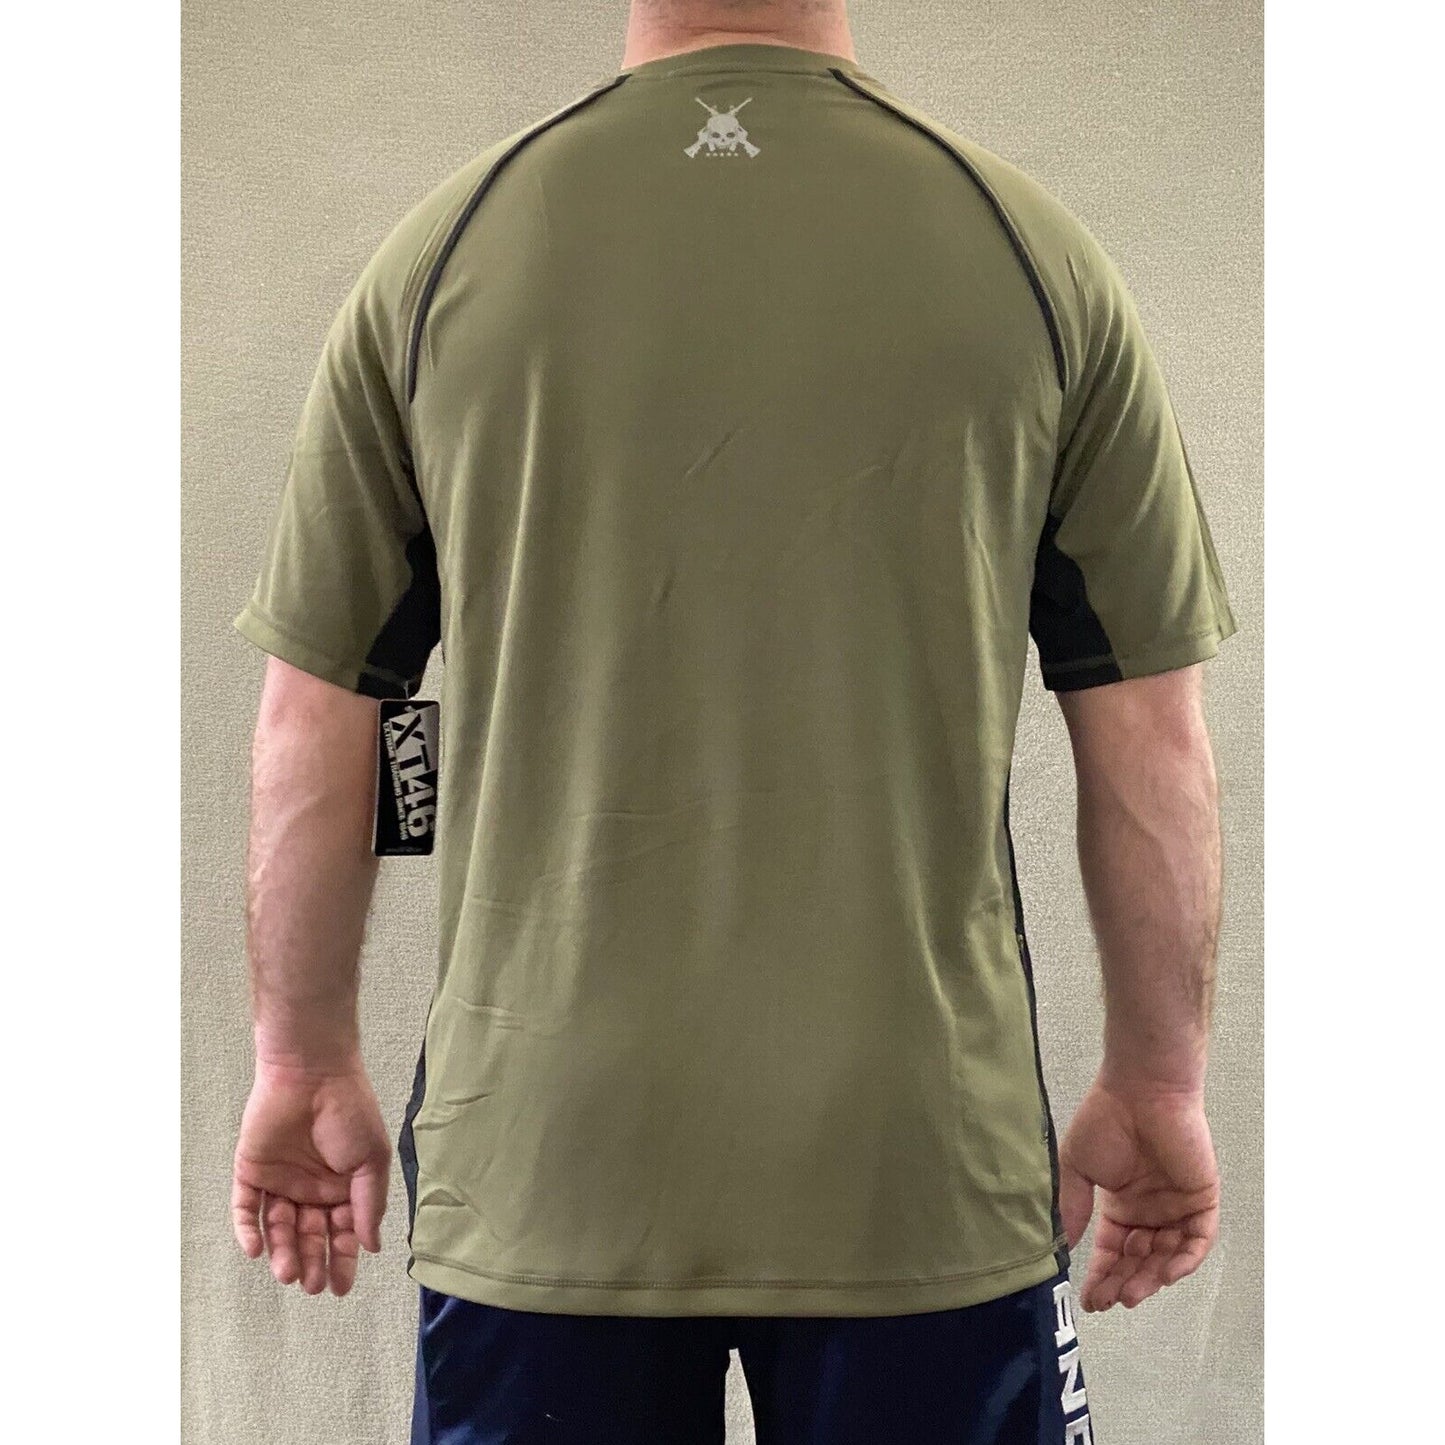 Soffe Extreme Training XT46 Men’s Medium Army Green Polyester Military Shirt NWT